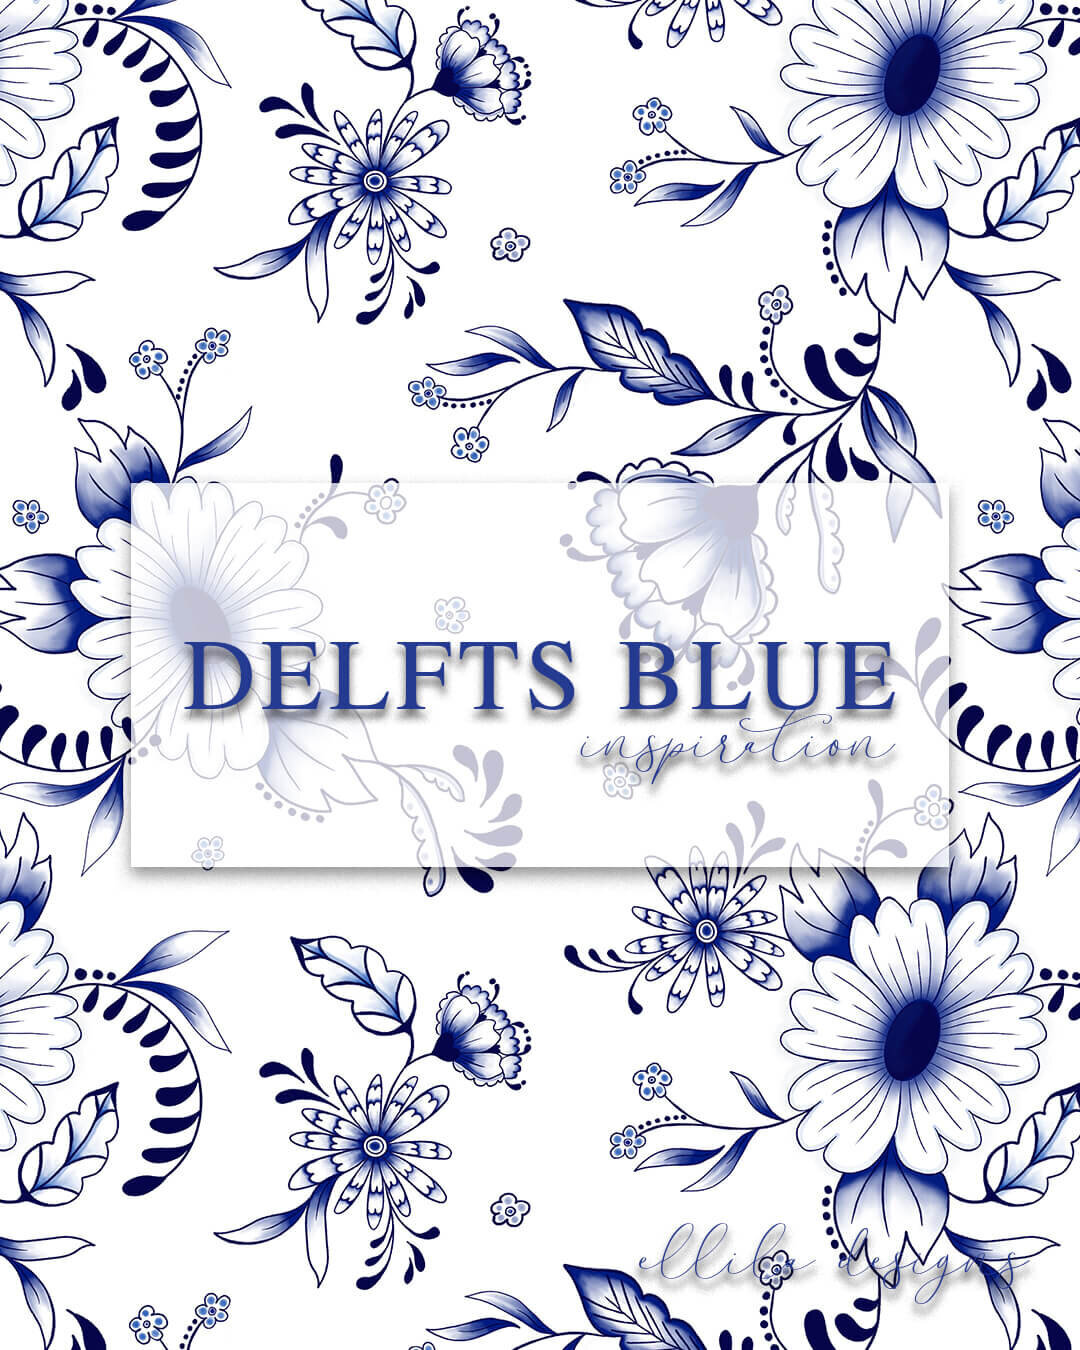 Delfts blue inspiration